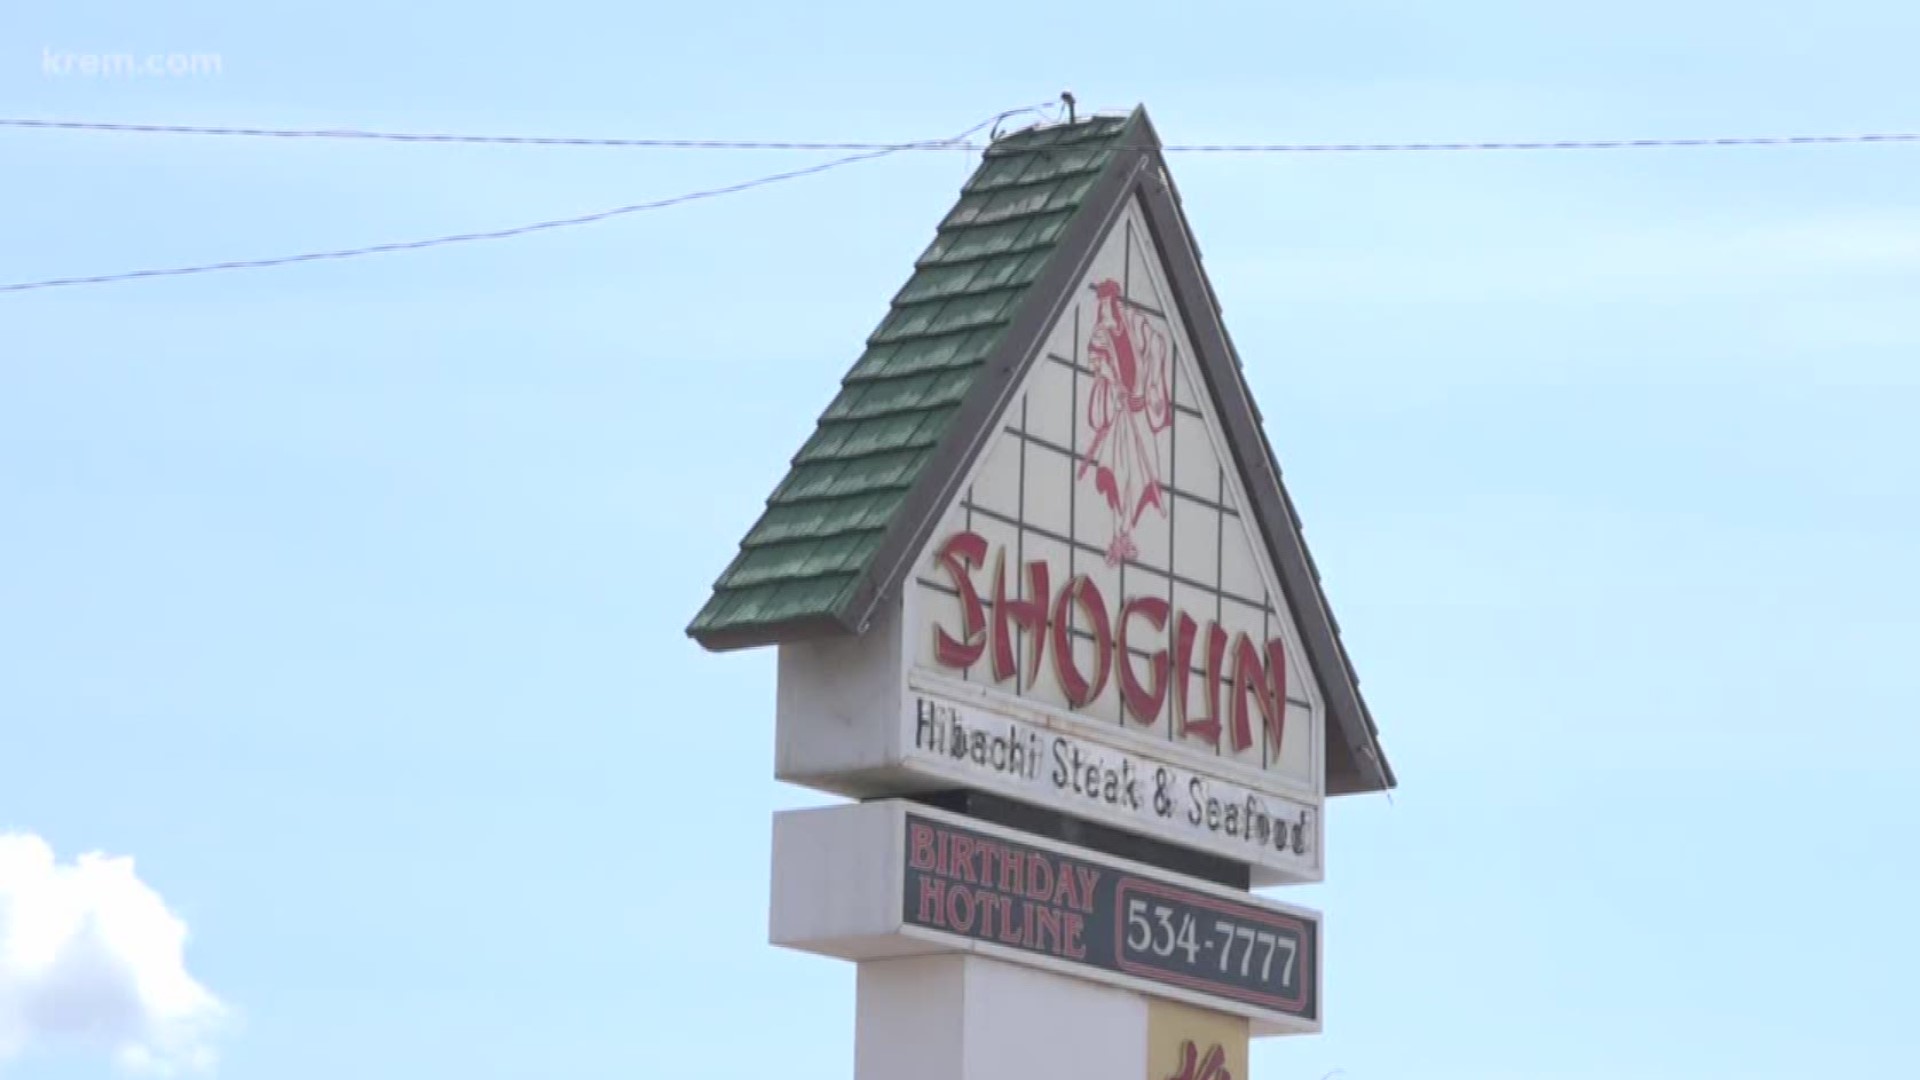 Spokane's Shogun Restaurant destroyed in flames (4-22-18)